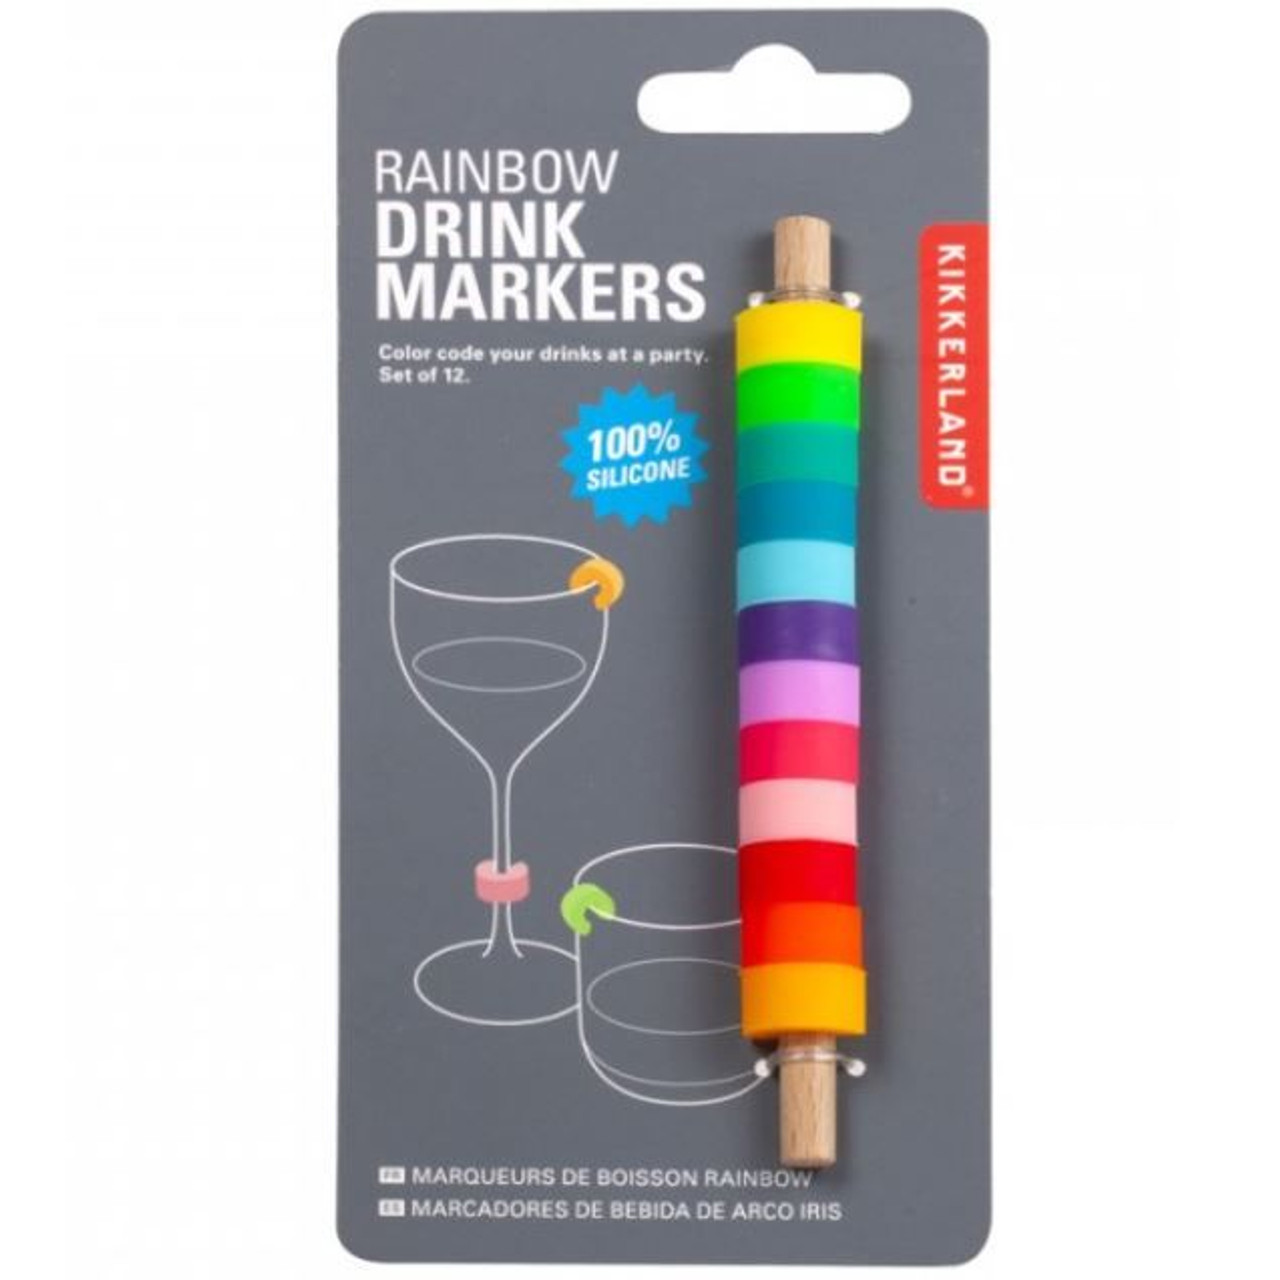 Rainbow Colours Jumbo Paint Markers